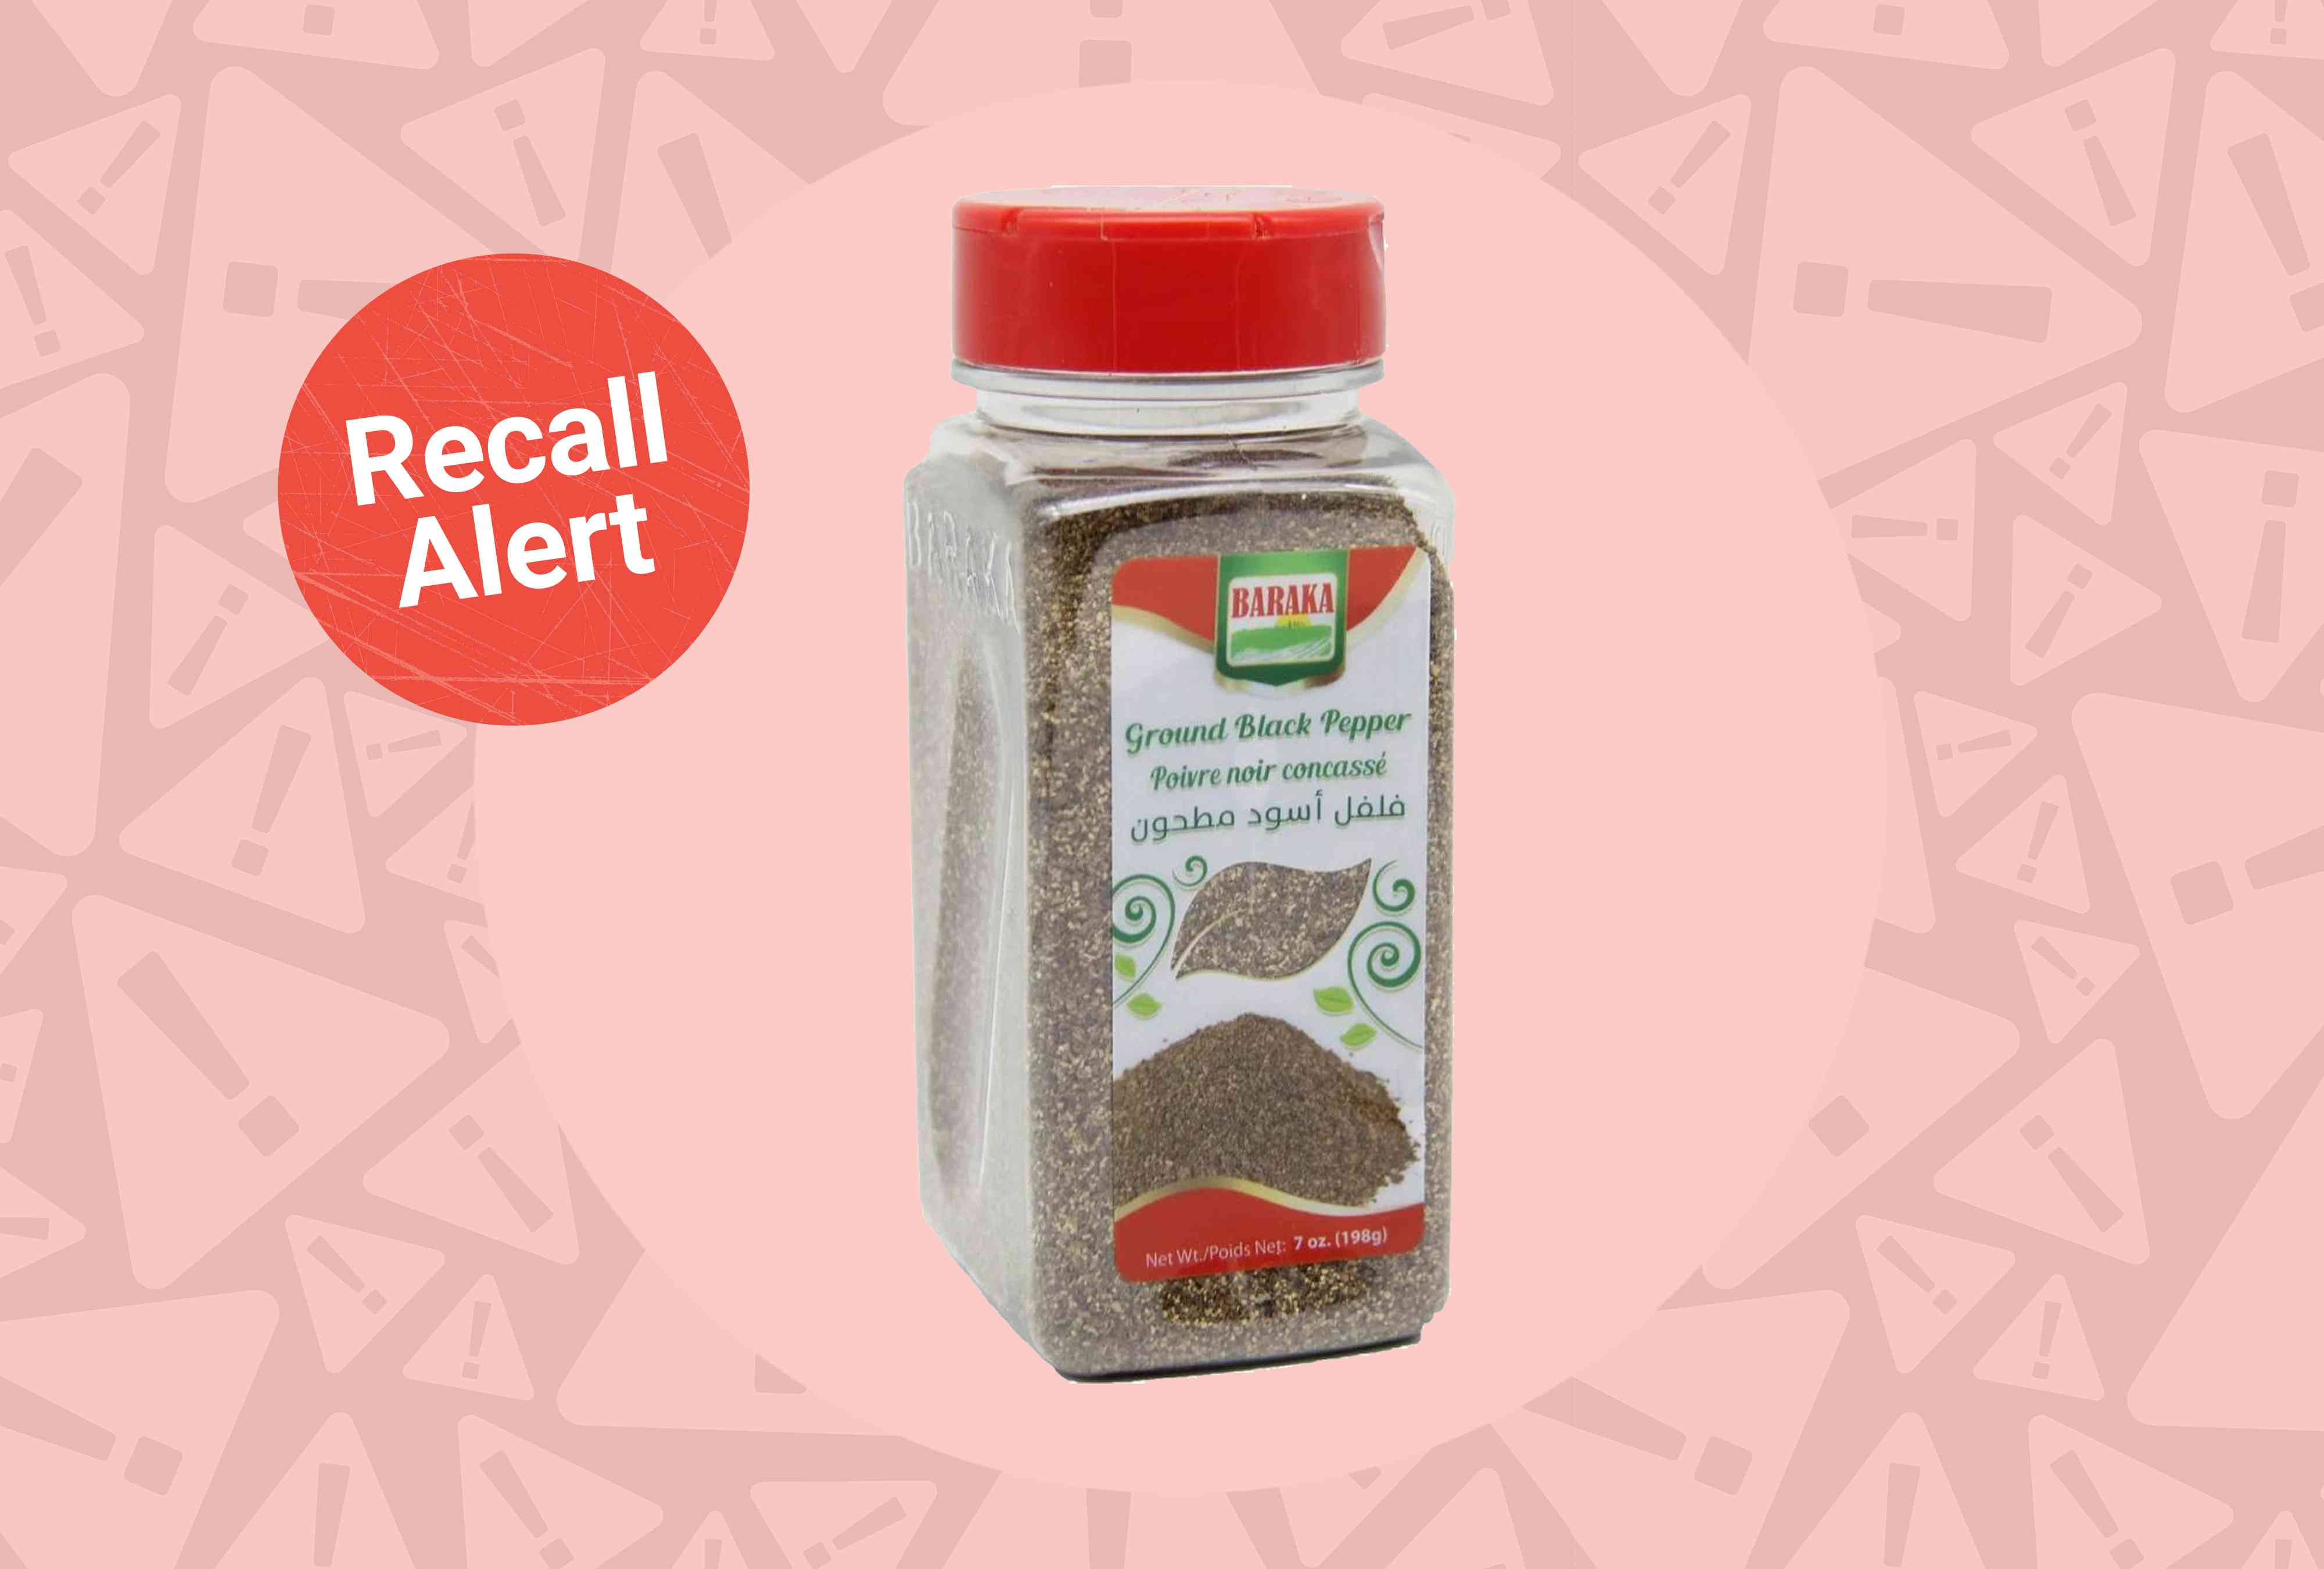 Ground Black Pepper Recalled Nationwide Due to Salmonella Contamination